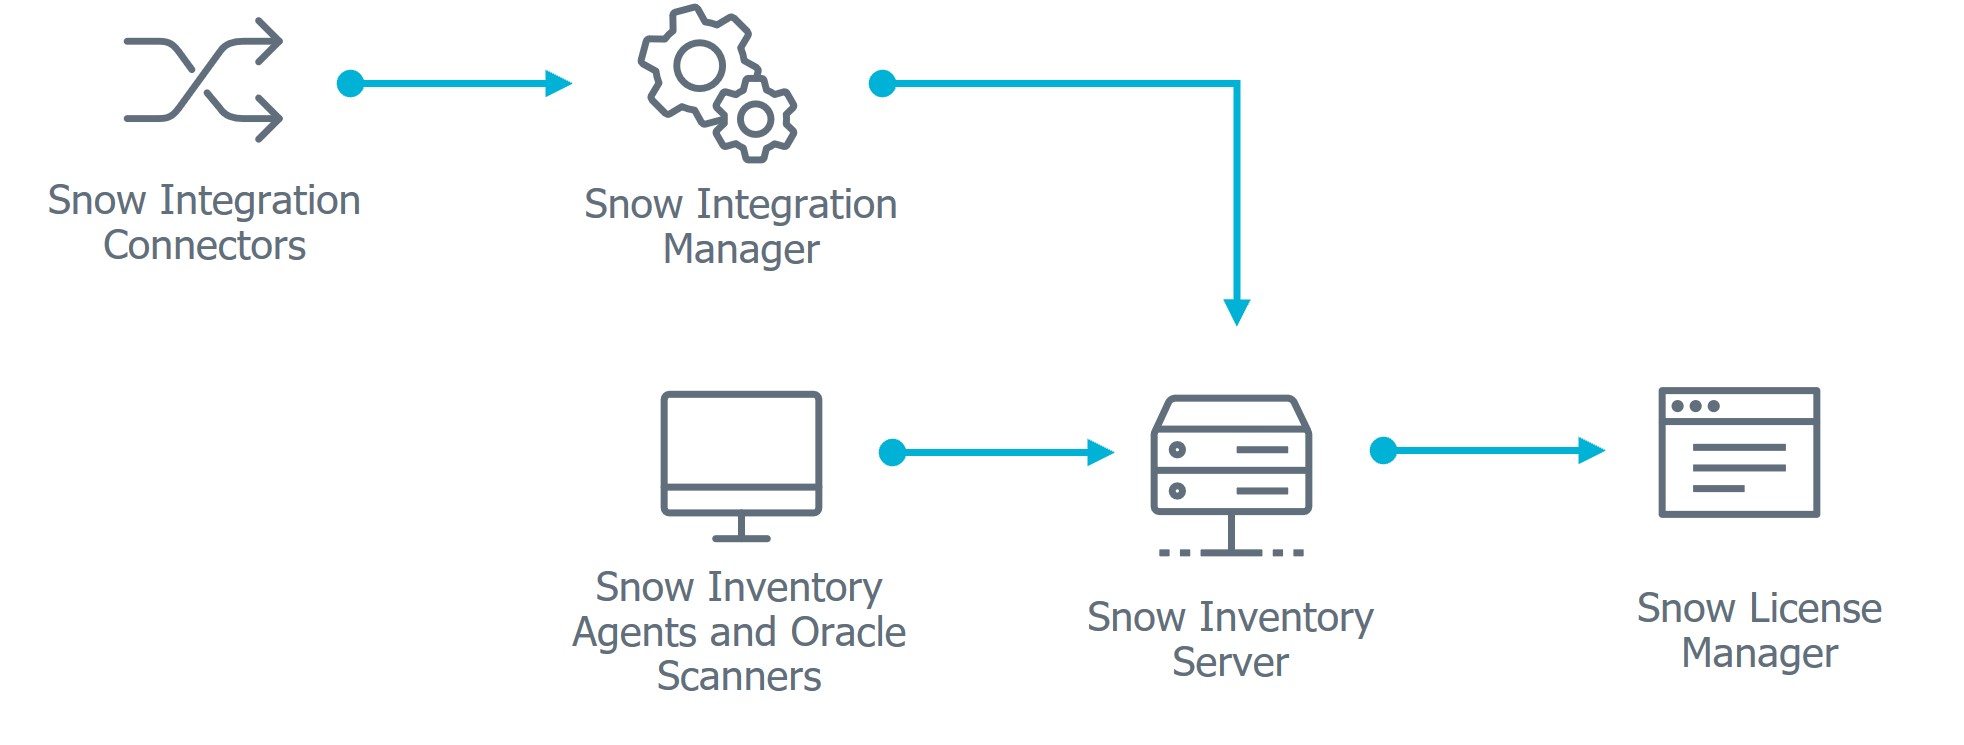 Snow_Inventory_Server_Overview.jpg